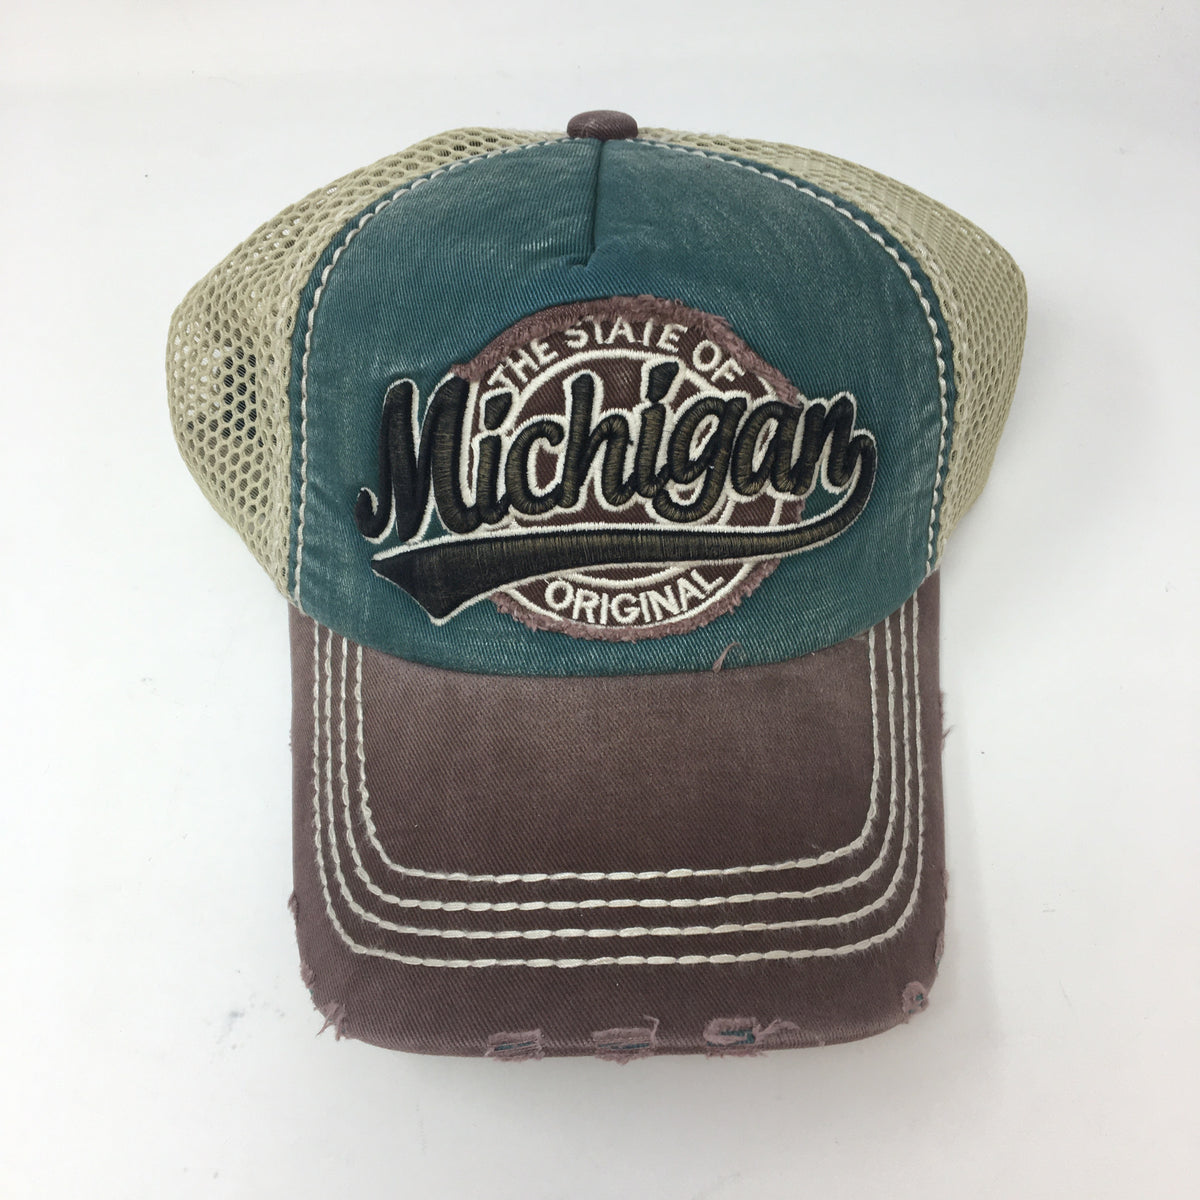 Michigan Original Baseball Cap